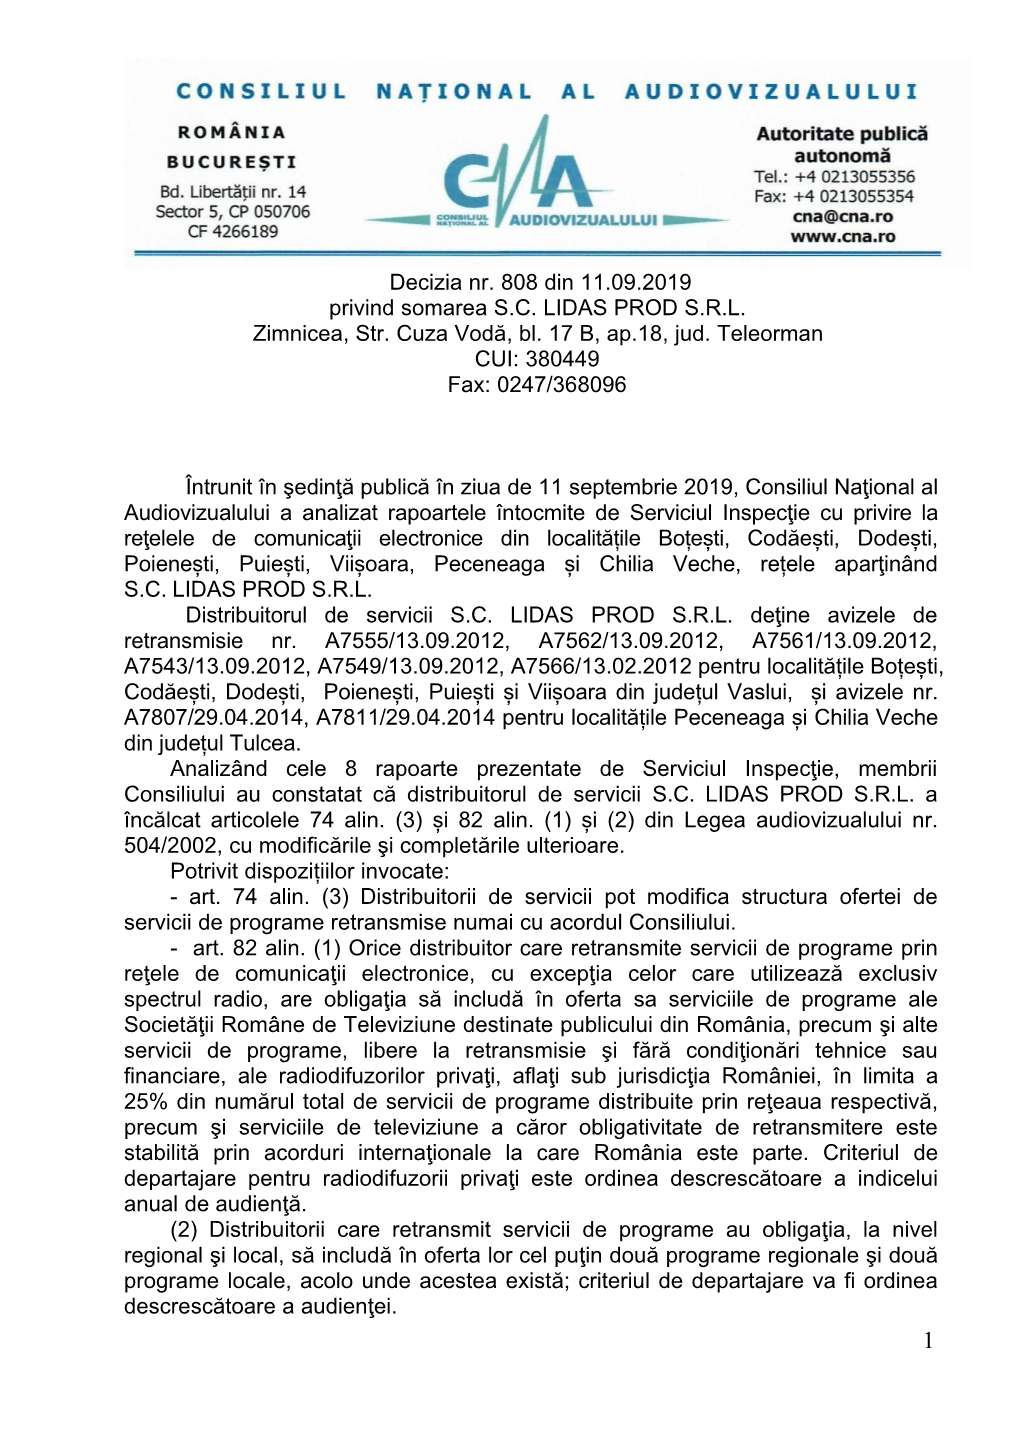 Decizia Nr. 808 Din 11.09.2019 Privind Somarea S.C. LIDAS PROD S.R.L. Zimnicea, Str